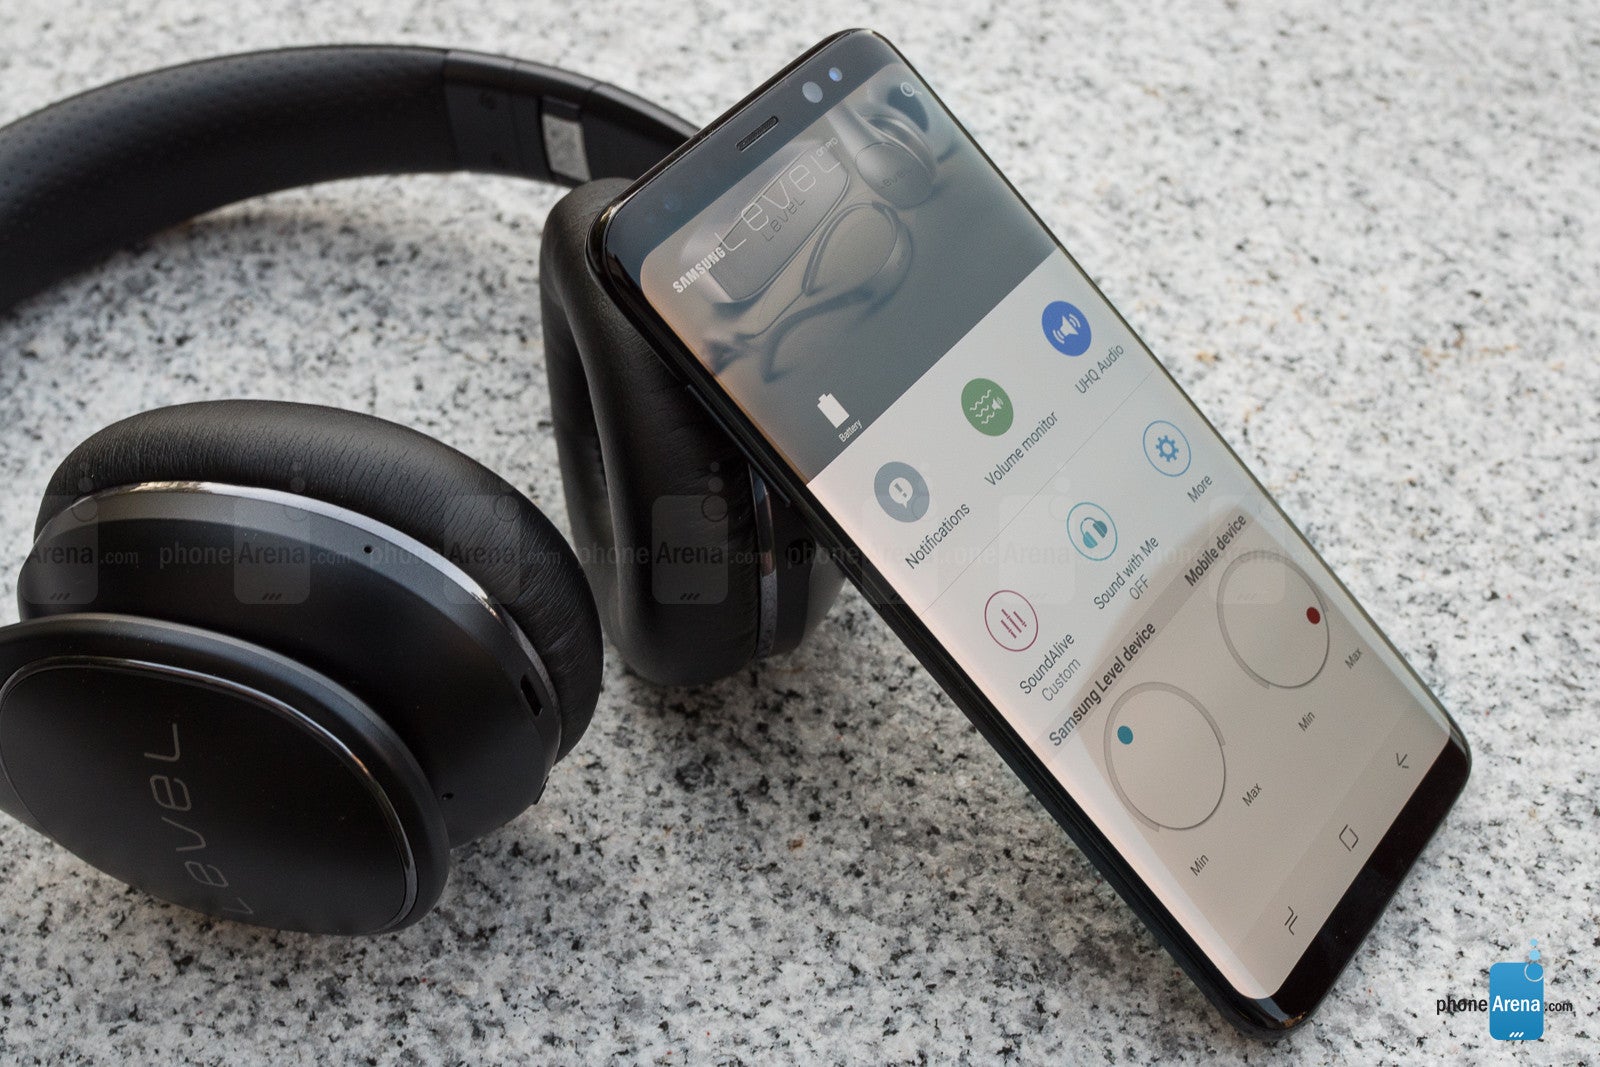 Samsung Level On Pro wireless headphones review